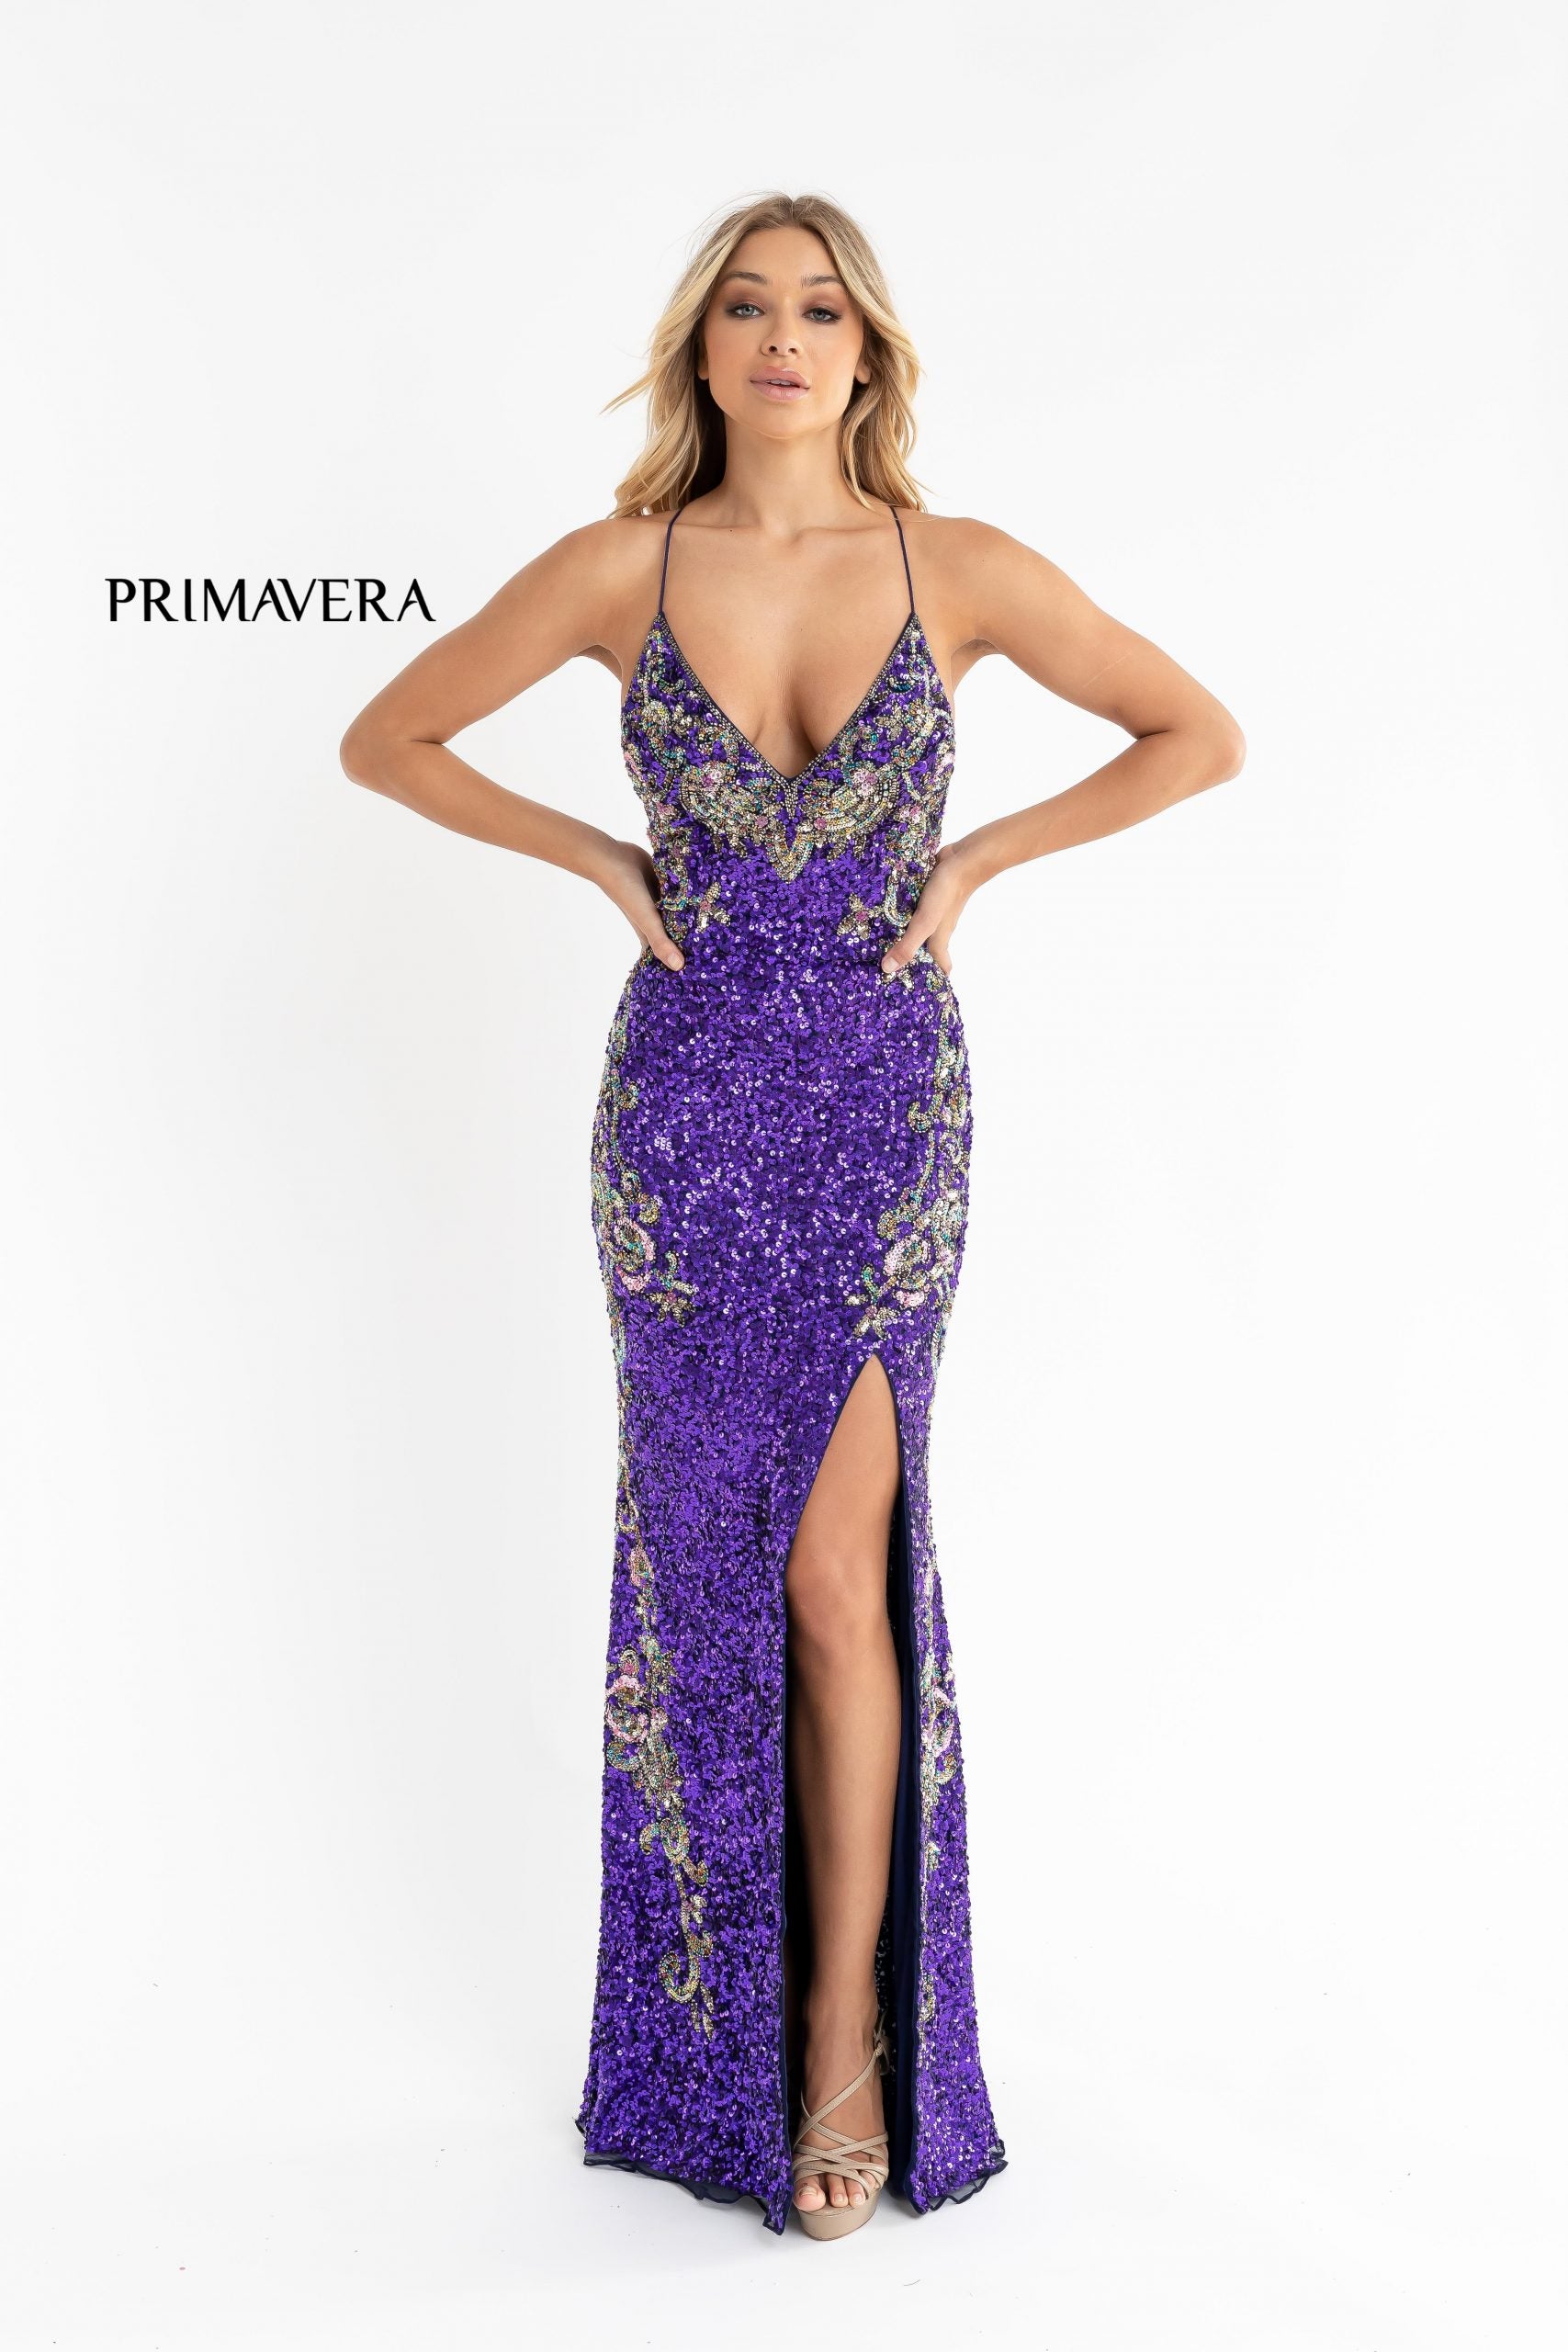 Primavera-Couture-3211-Purple-prom-dress-front-4-v-neckline-floral-sequins-lace-up-tie-back-slit